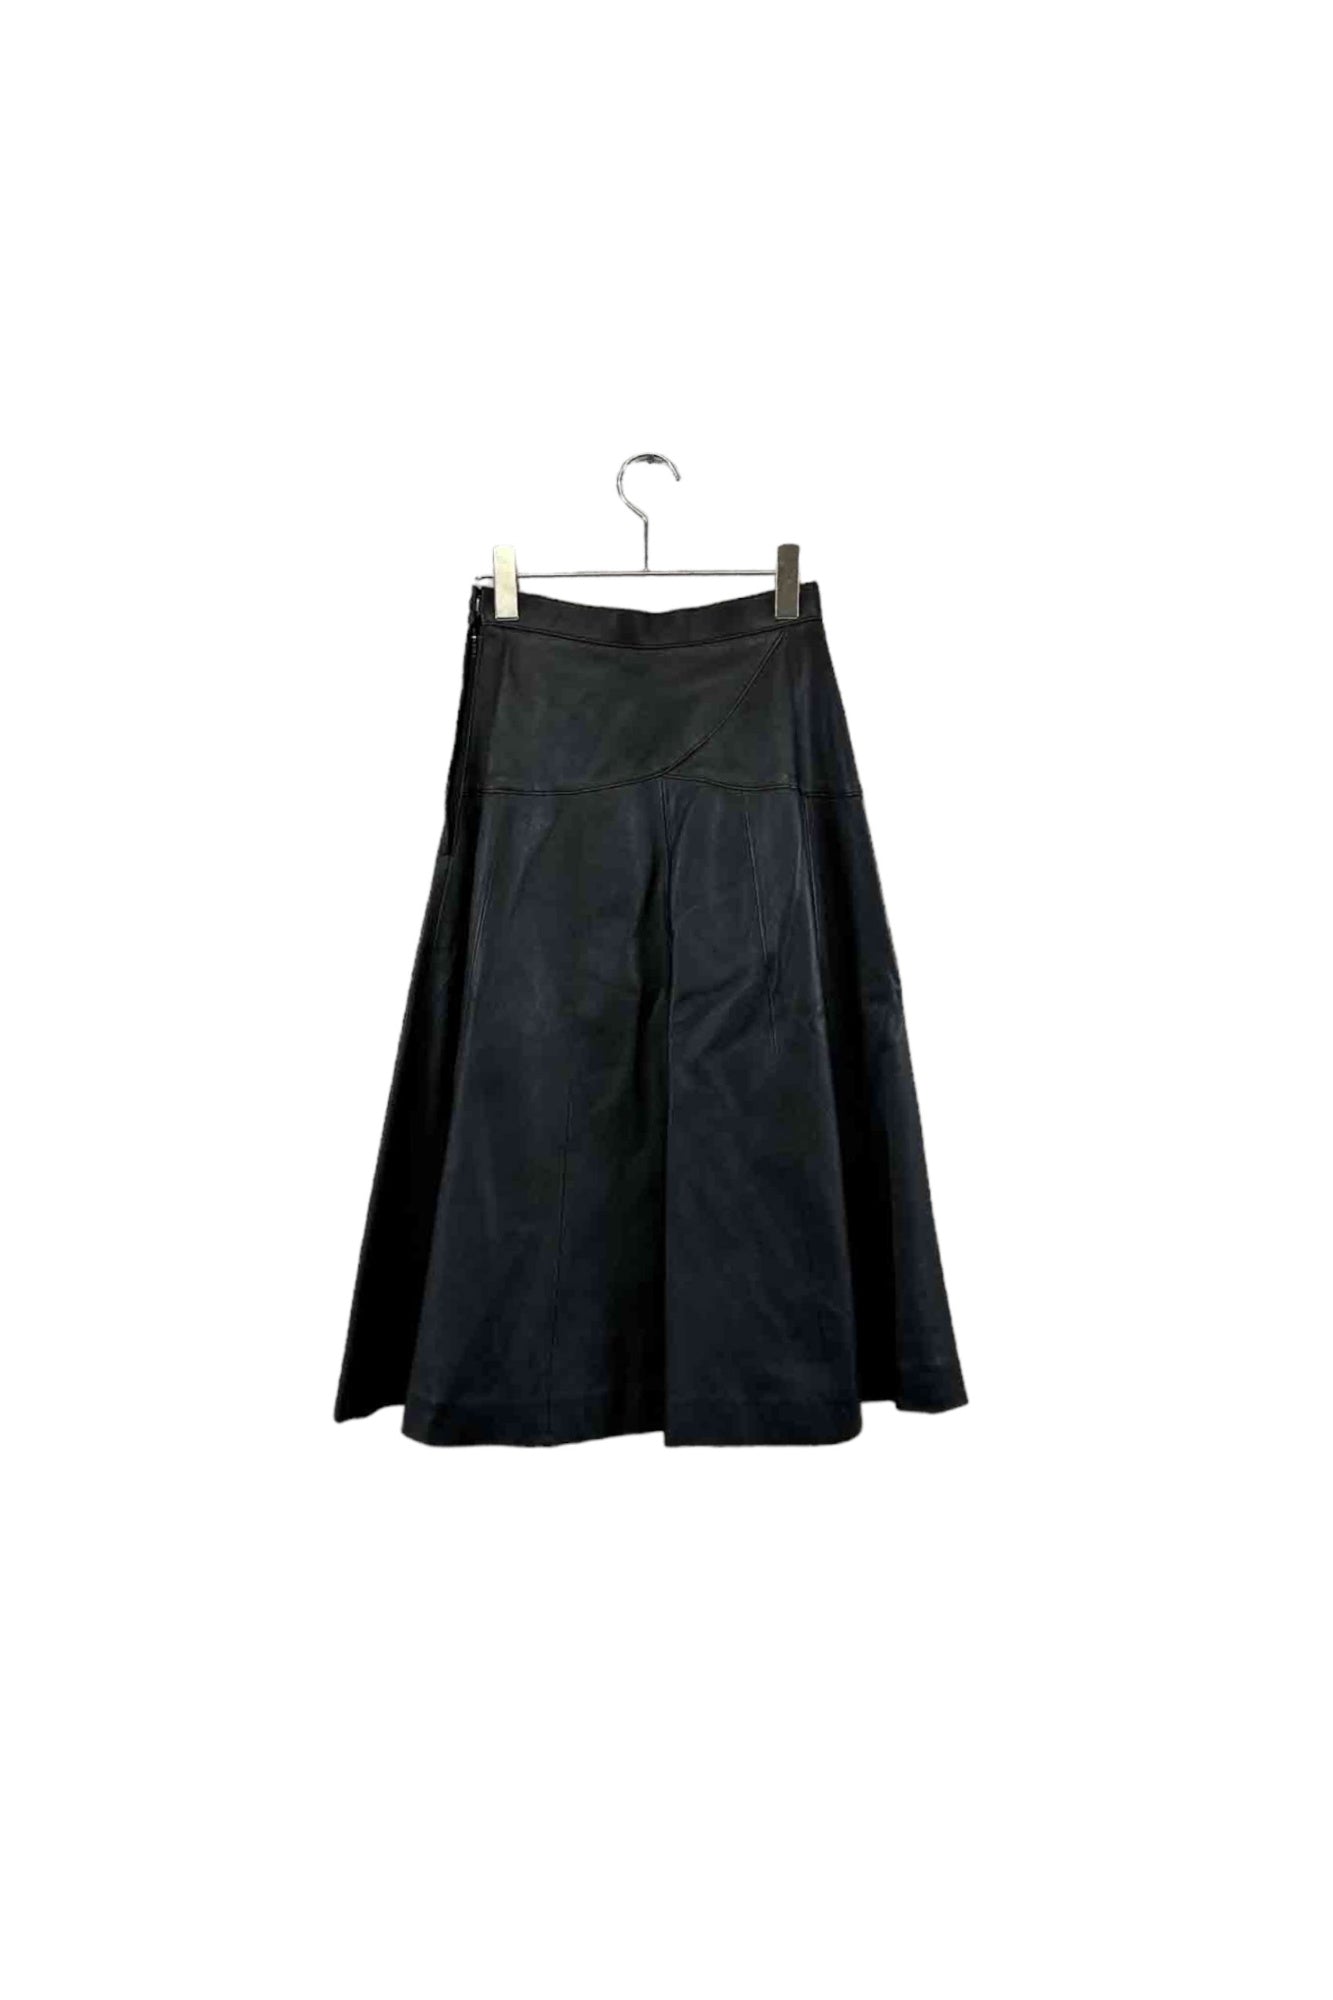 black lamb leather skirt